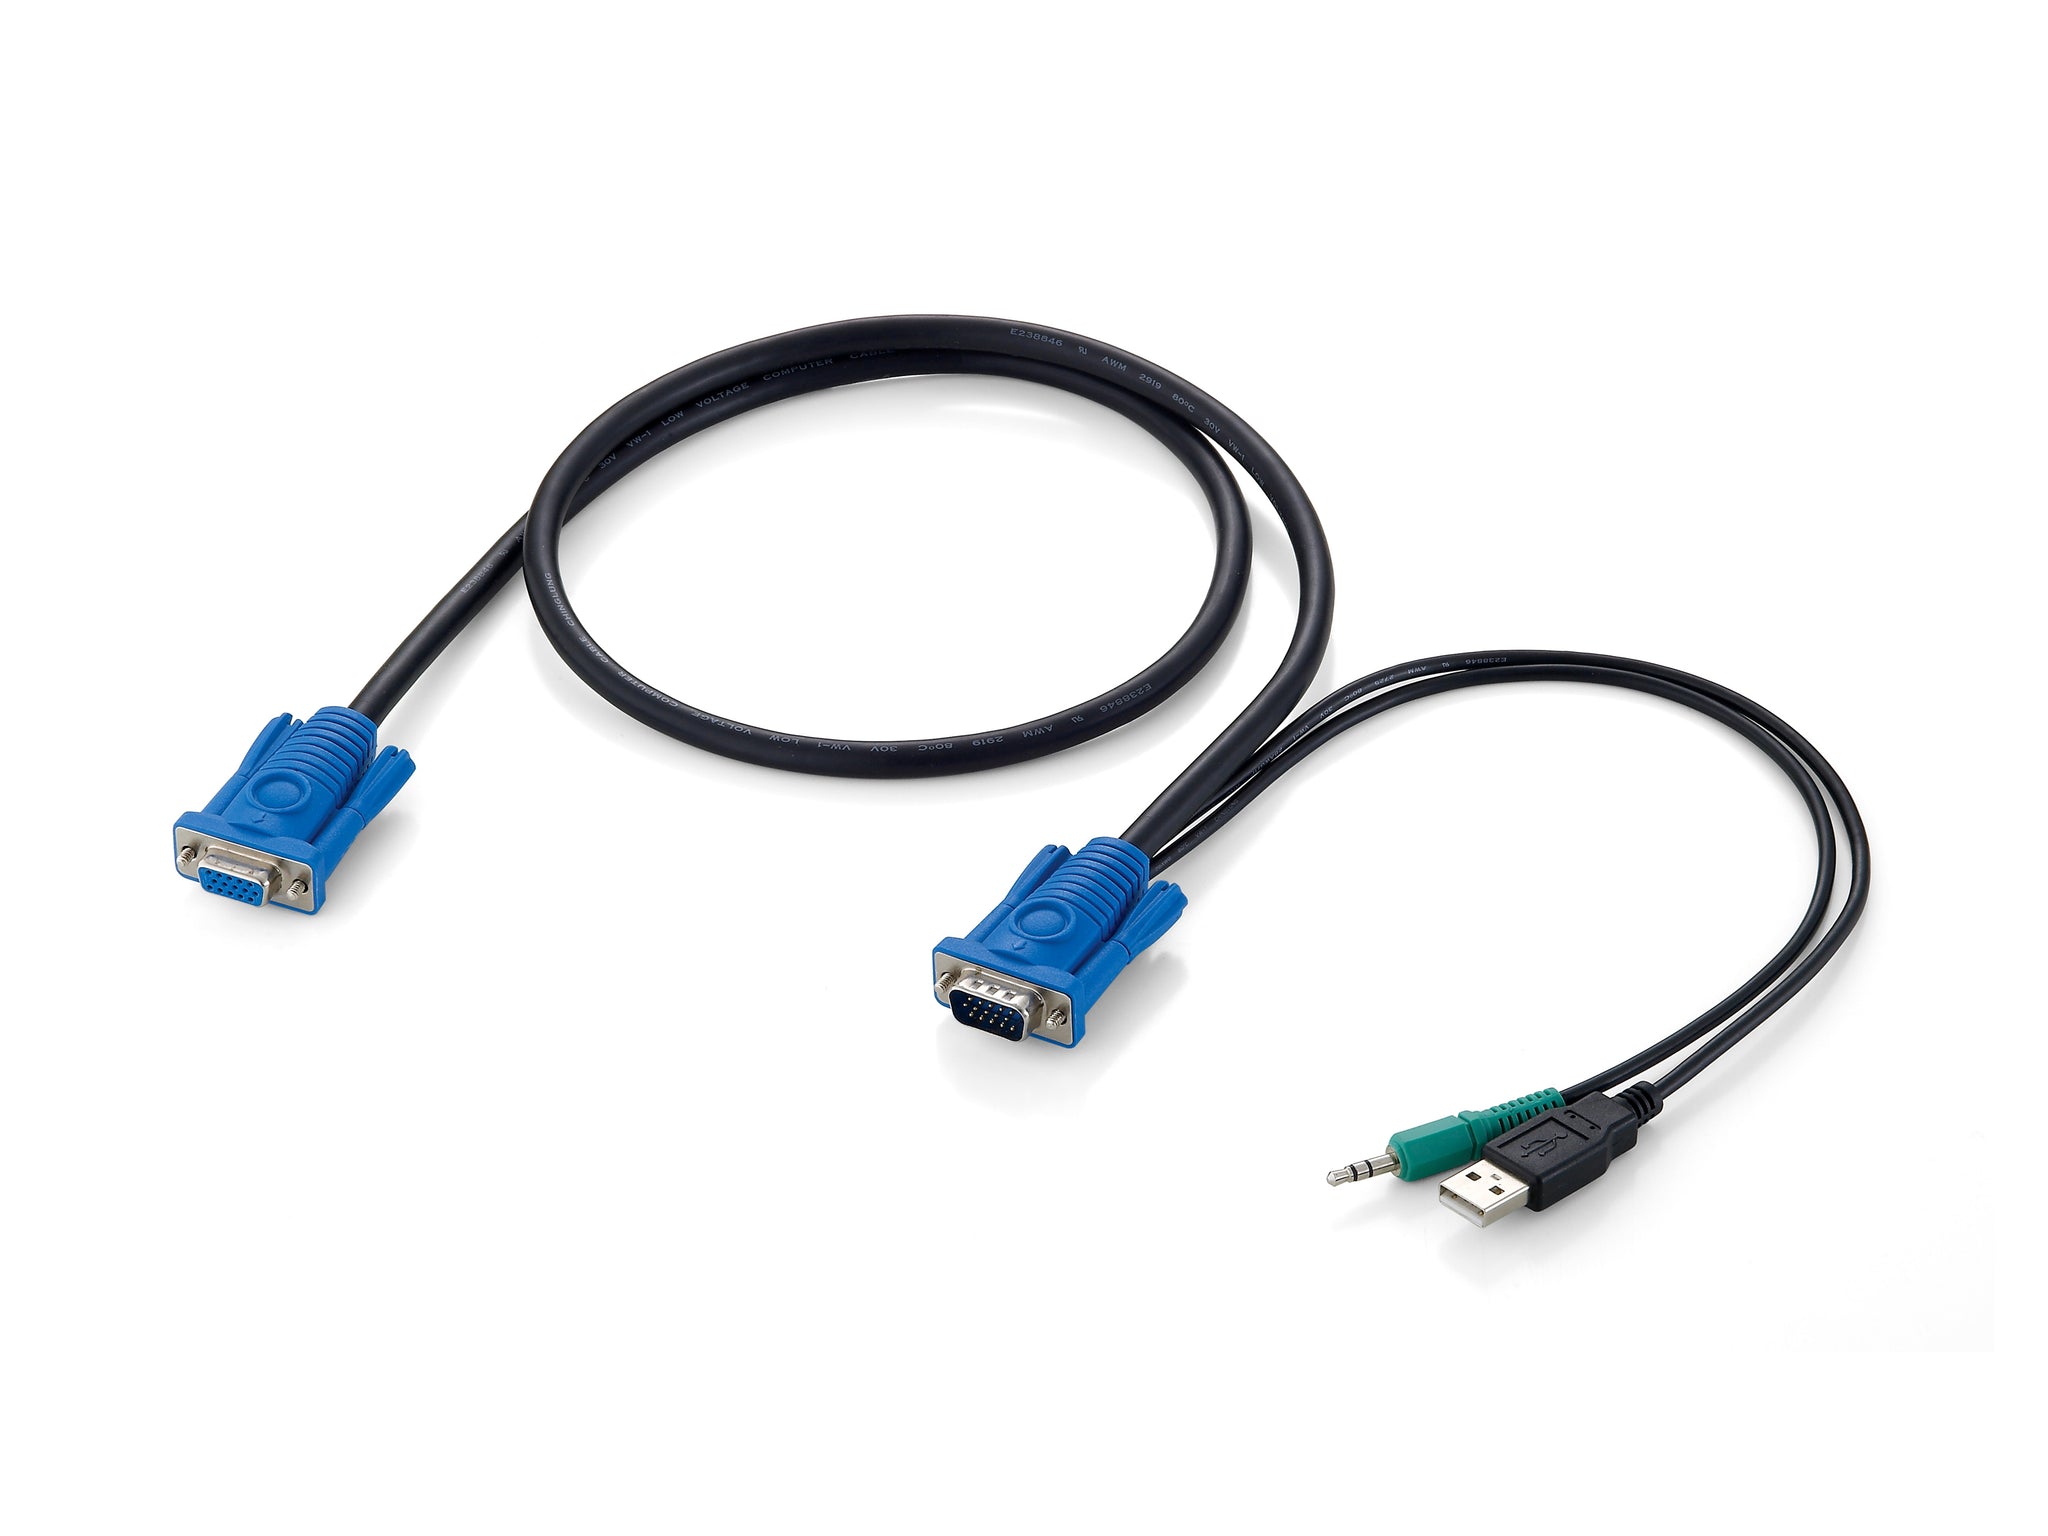 VGA-0011 1m VGA Male to Female and Audio Cable